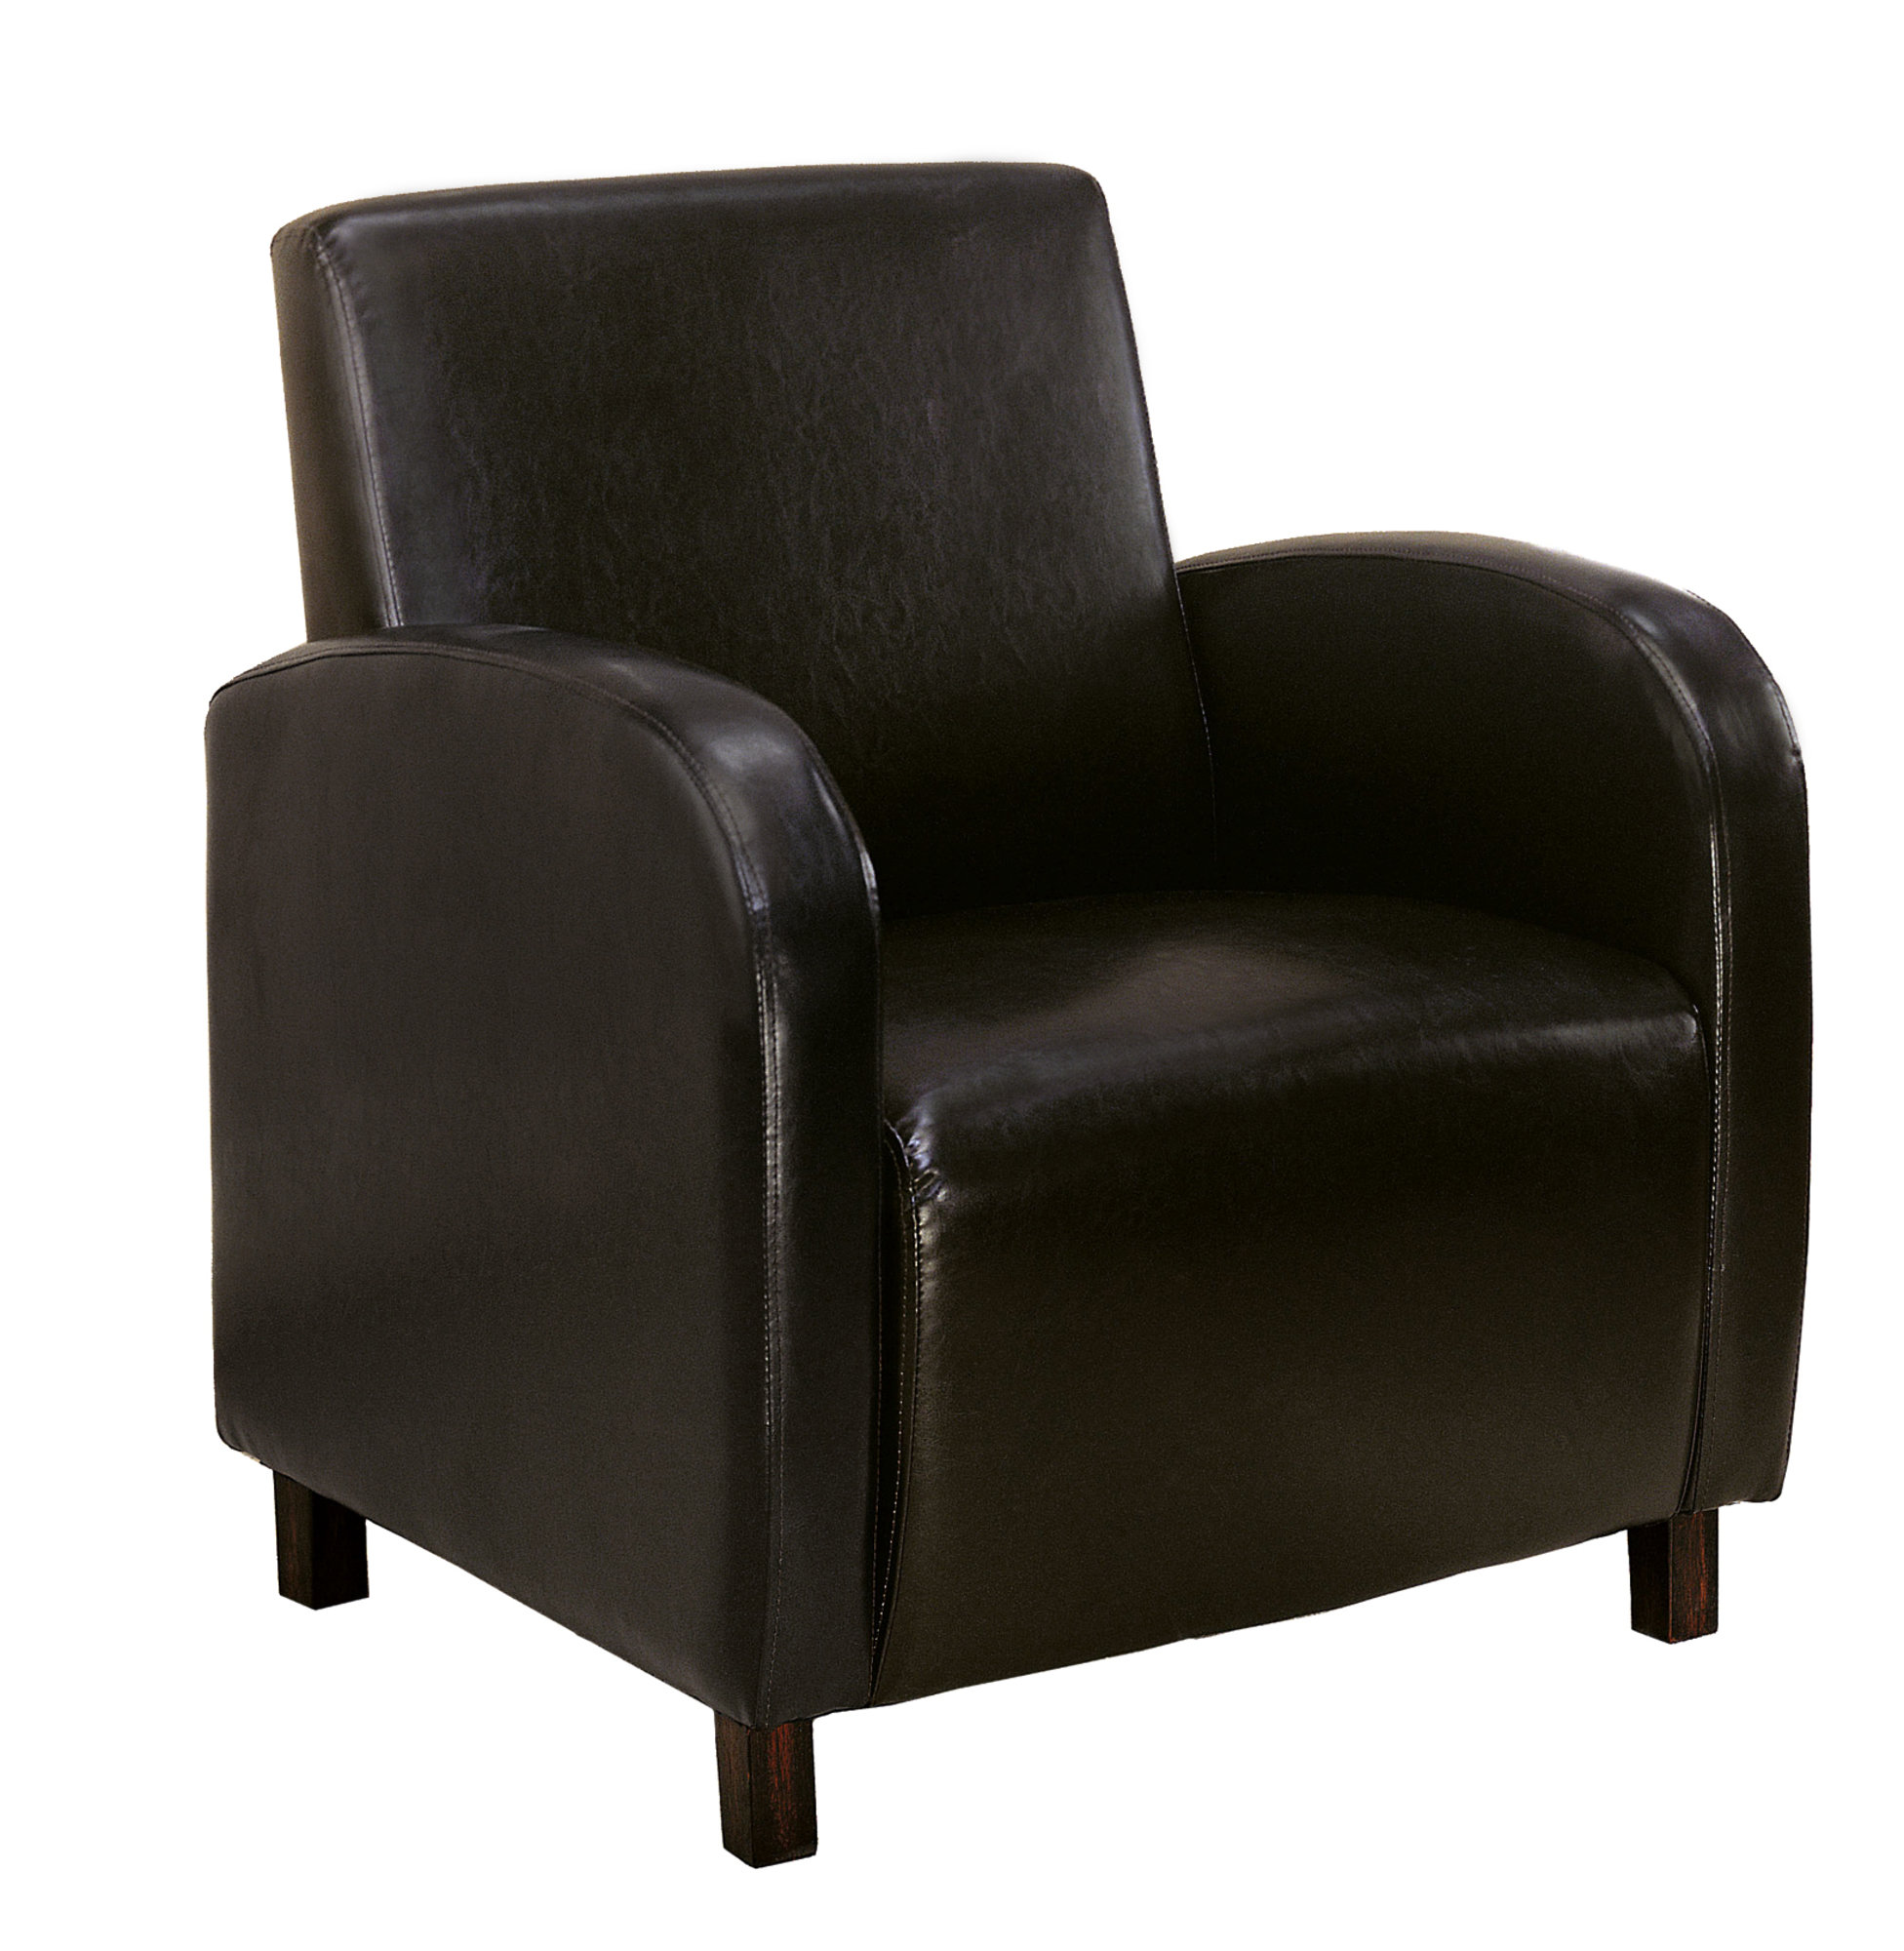 Chairs brown. Monarch Upholstered Arm Chair. Офисный диван Монарх (v-400). Кресло Браун. Мягкий стул.